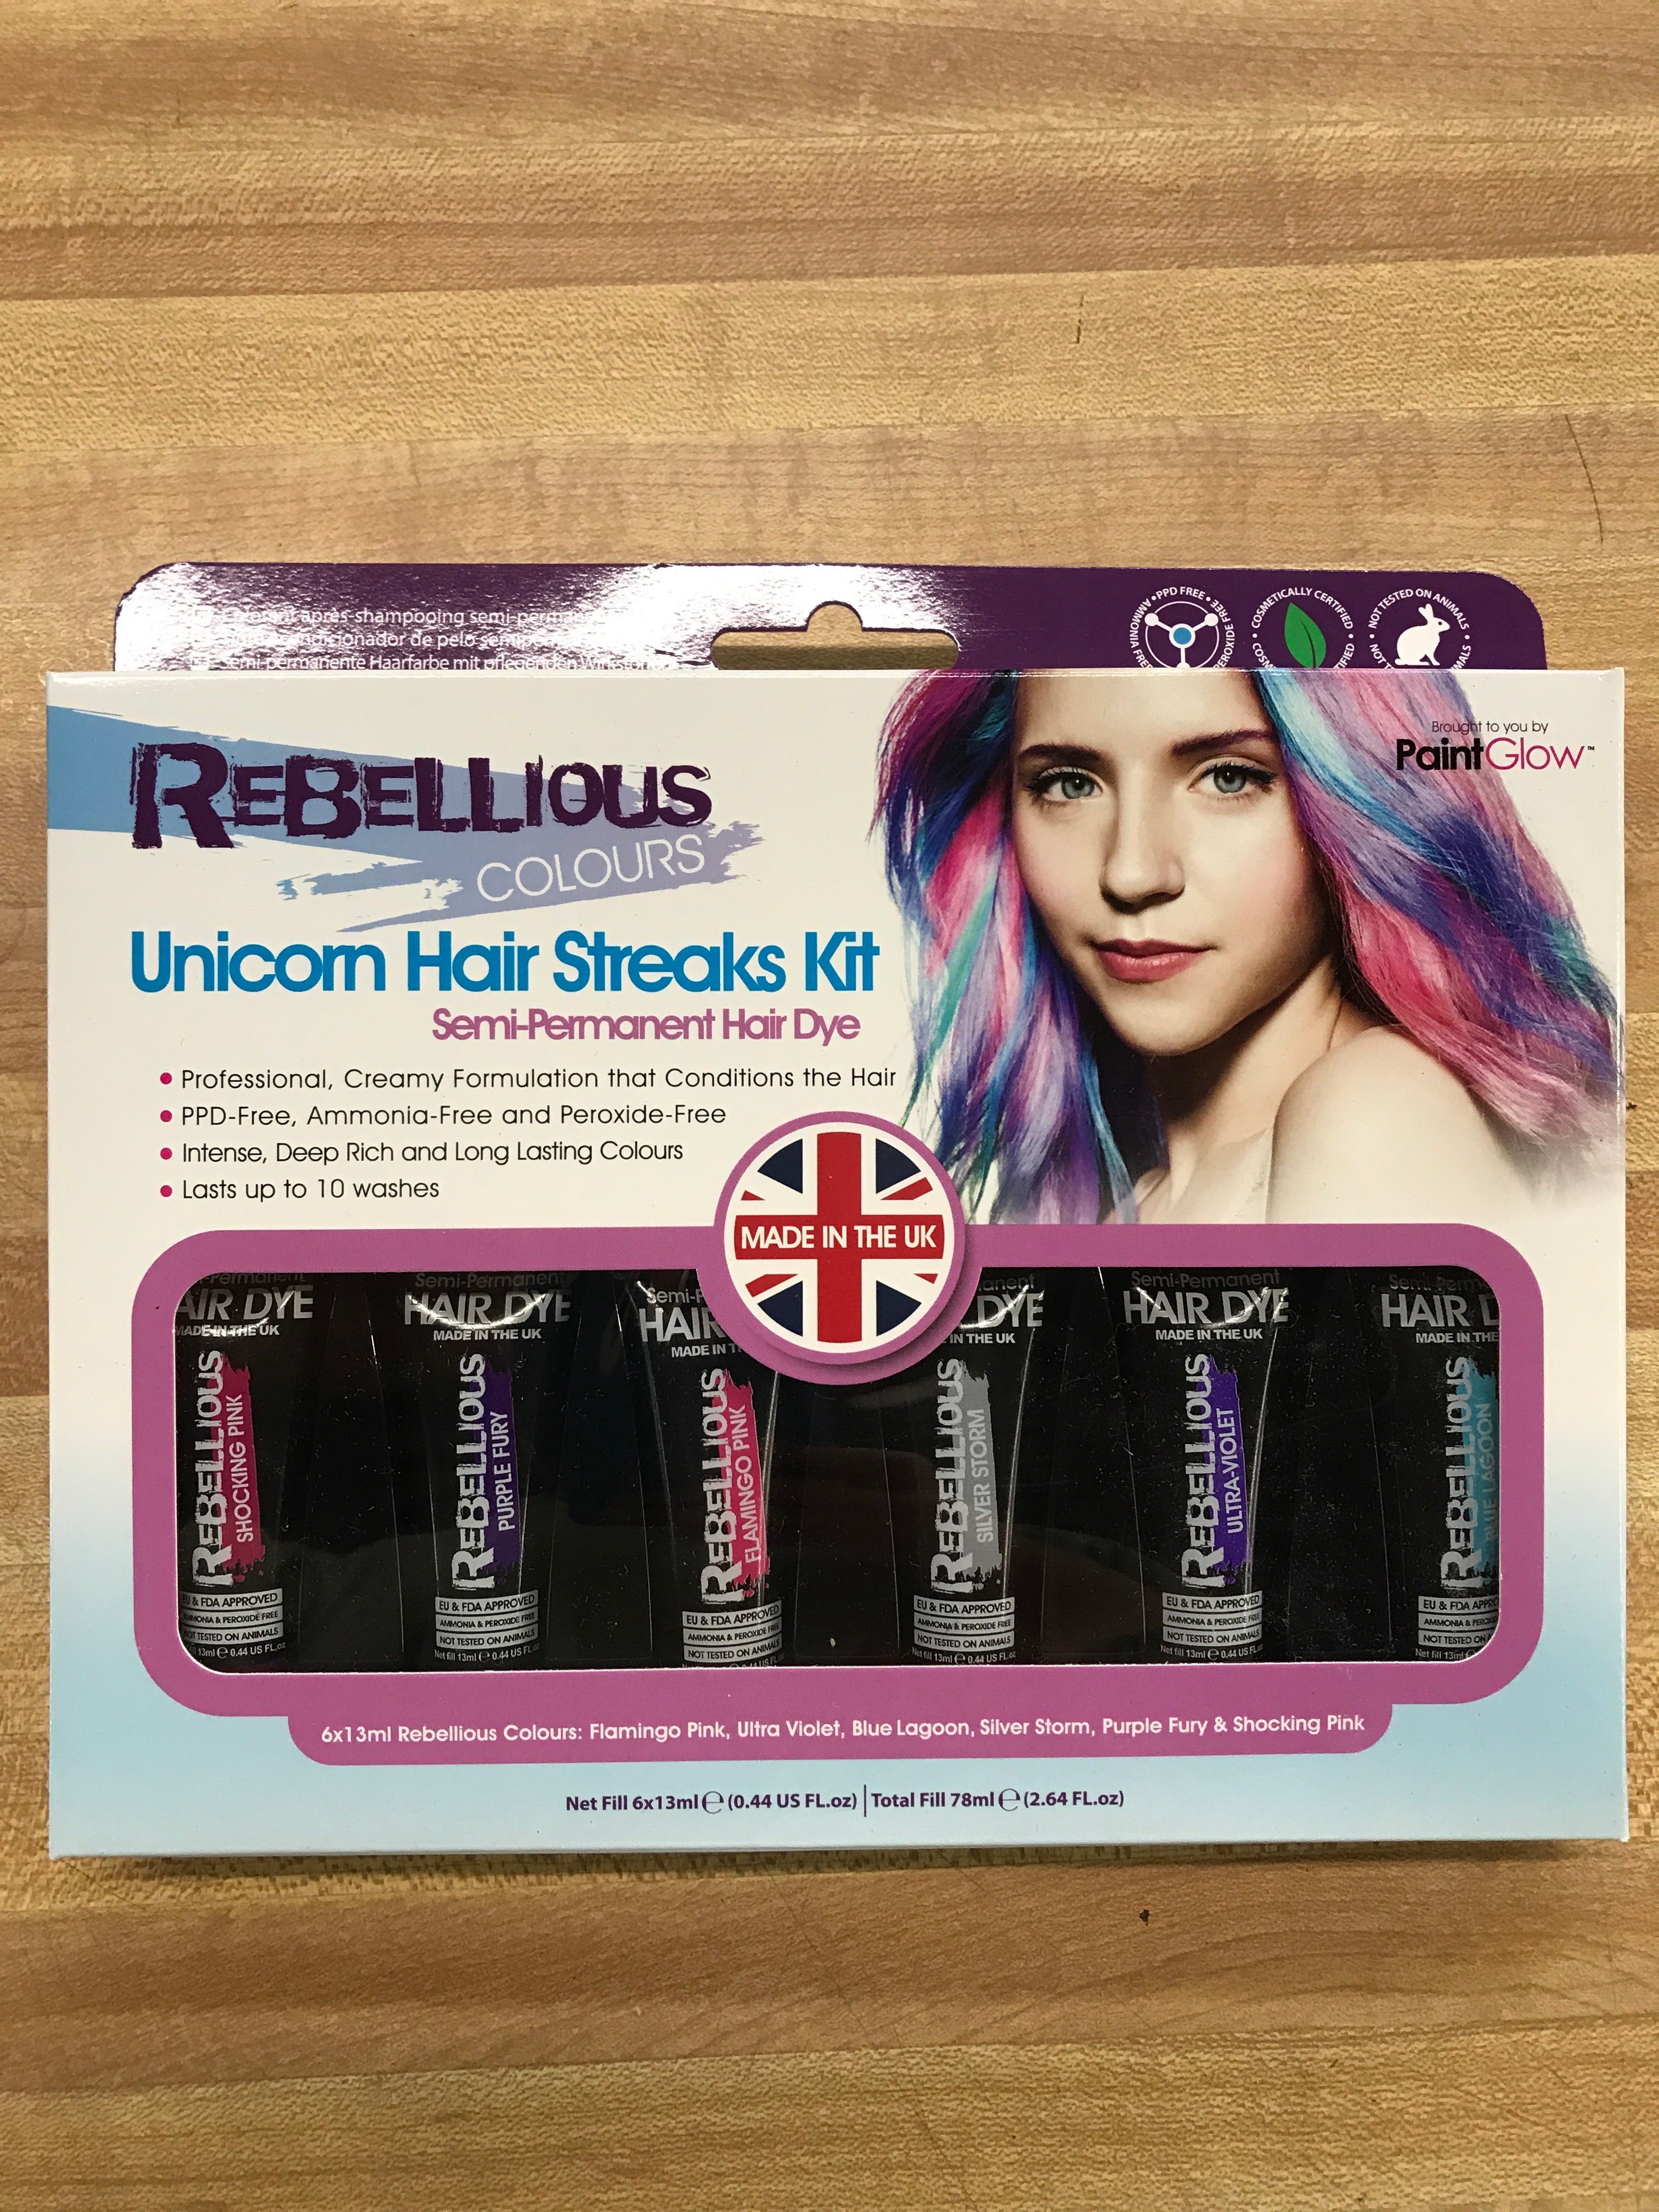 Rebellious Unicorn hair streak kits